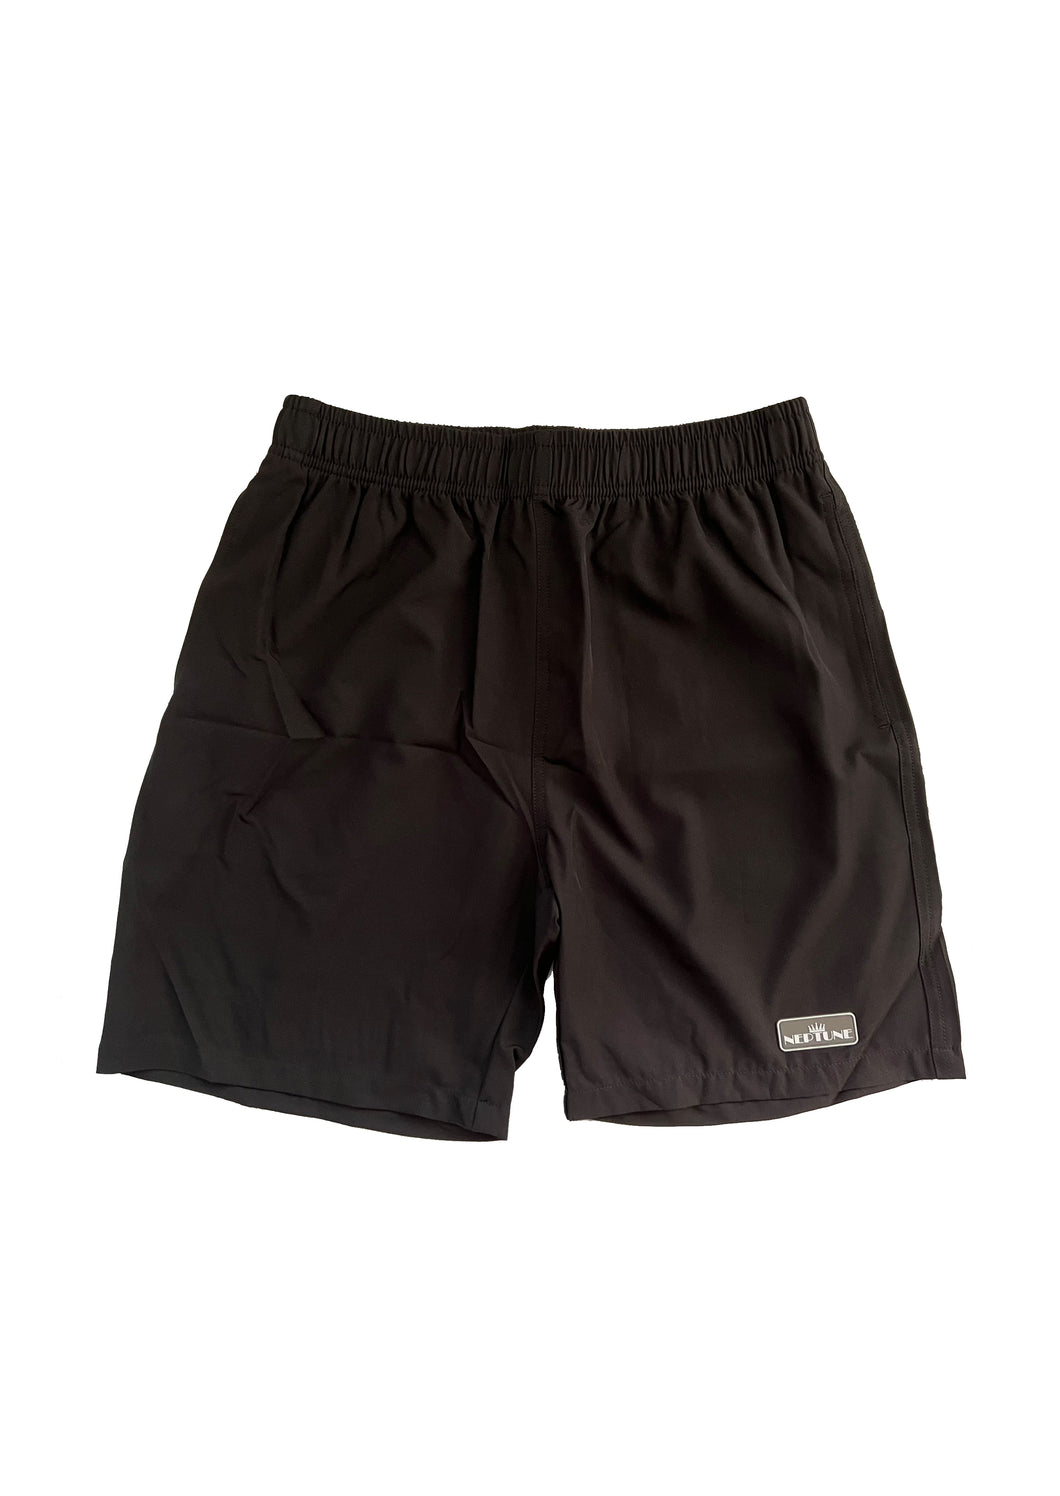 Adult Unisex Black Board Shorts